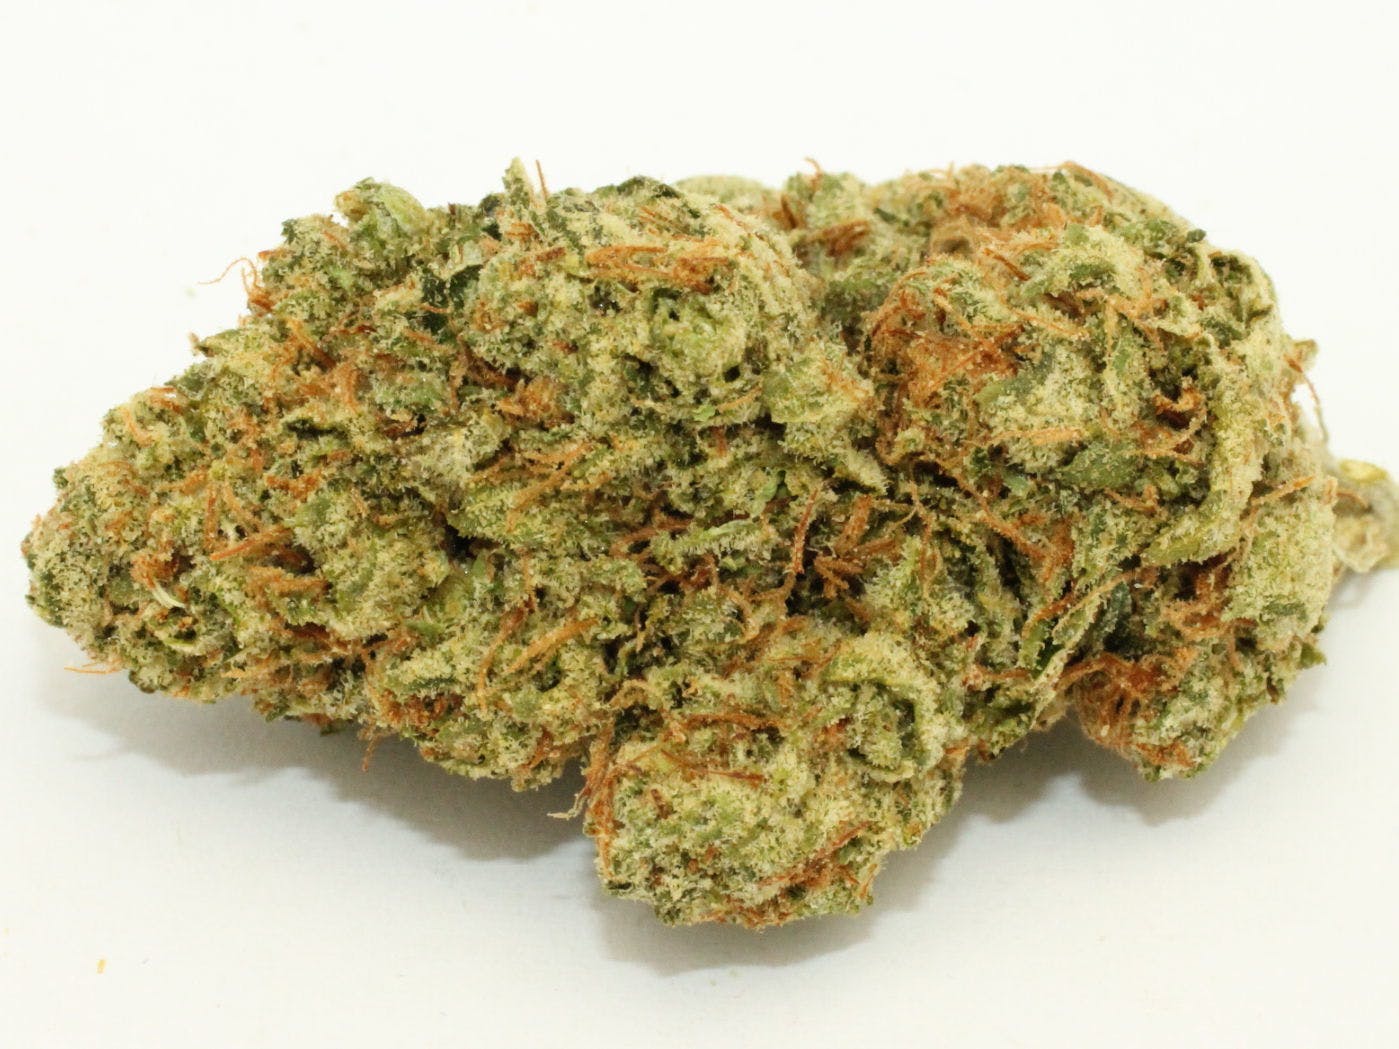 marijuana-dispensaries-strictly-20-cap-in-bakersfield-vip-sfv-og-2oz270-qp530